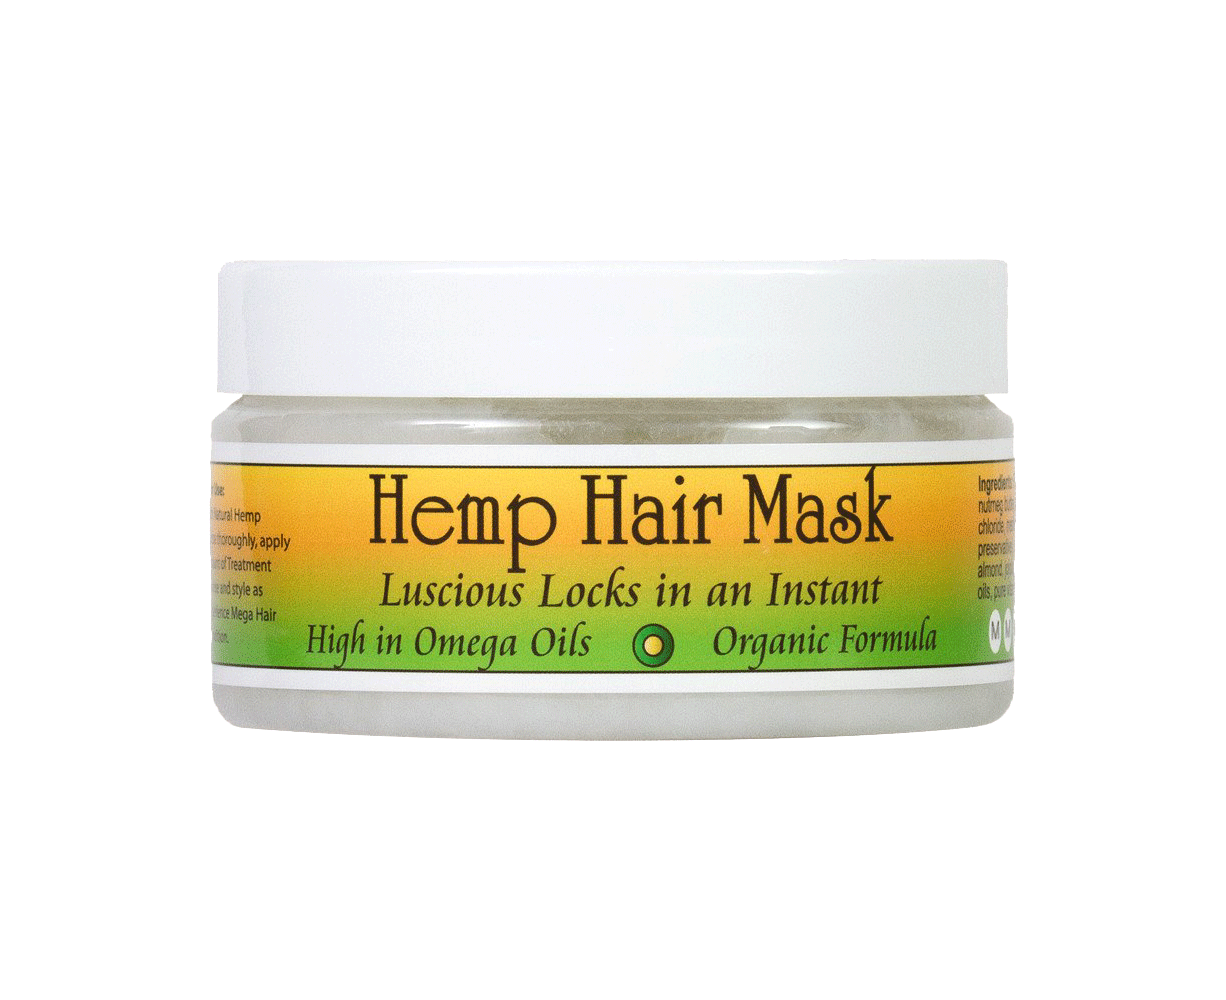 Hair Mask - 200ml Tub - BEST SELLER - Natural Haircare + Treatment